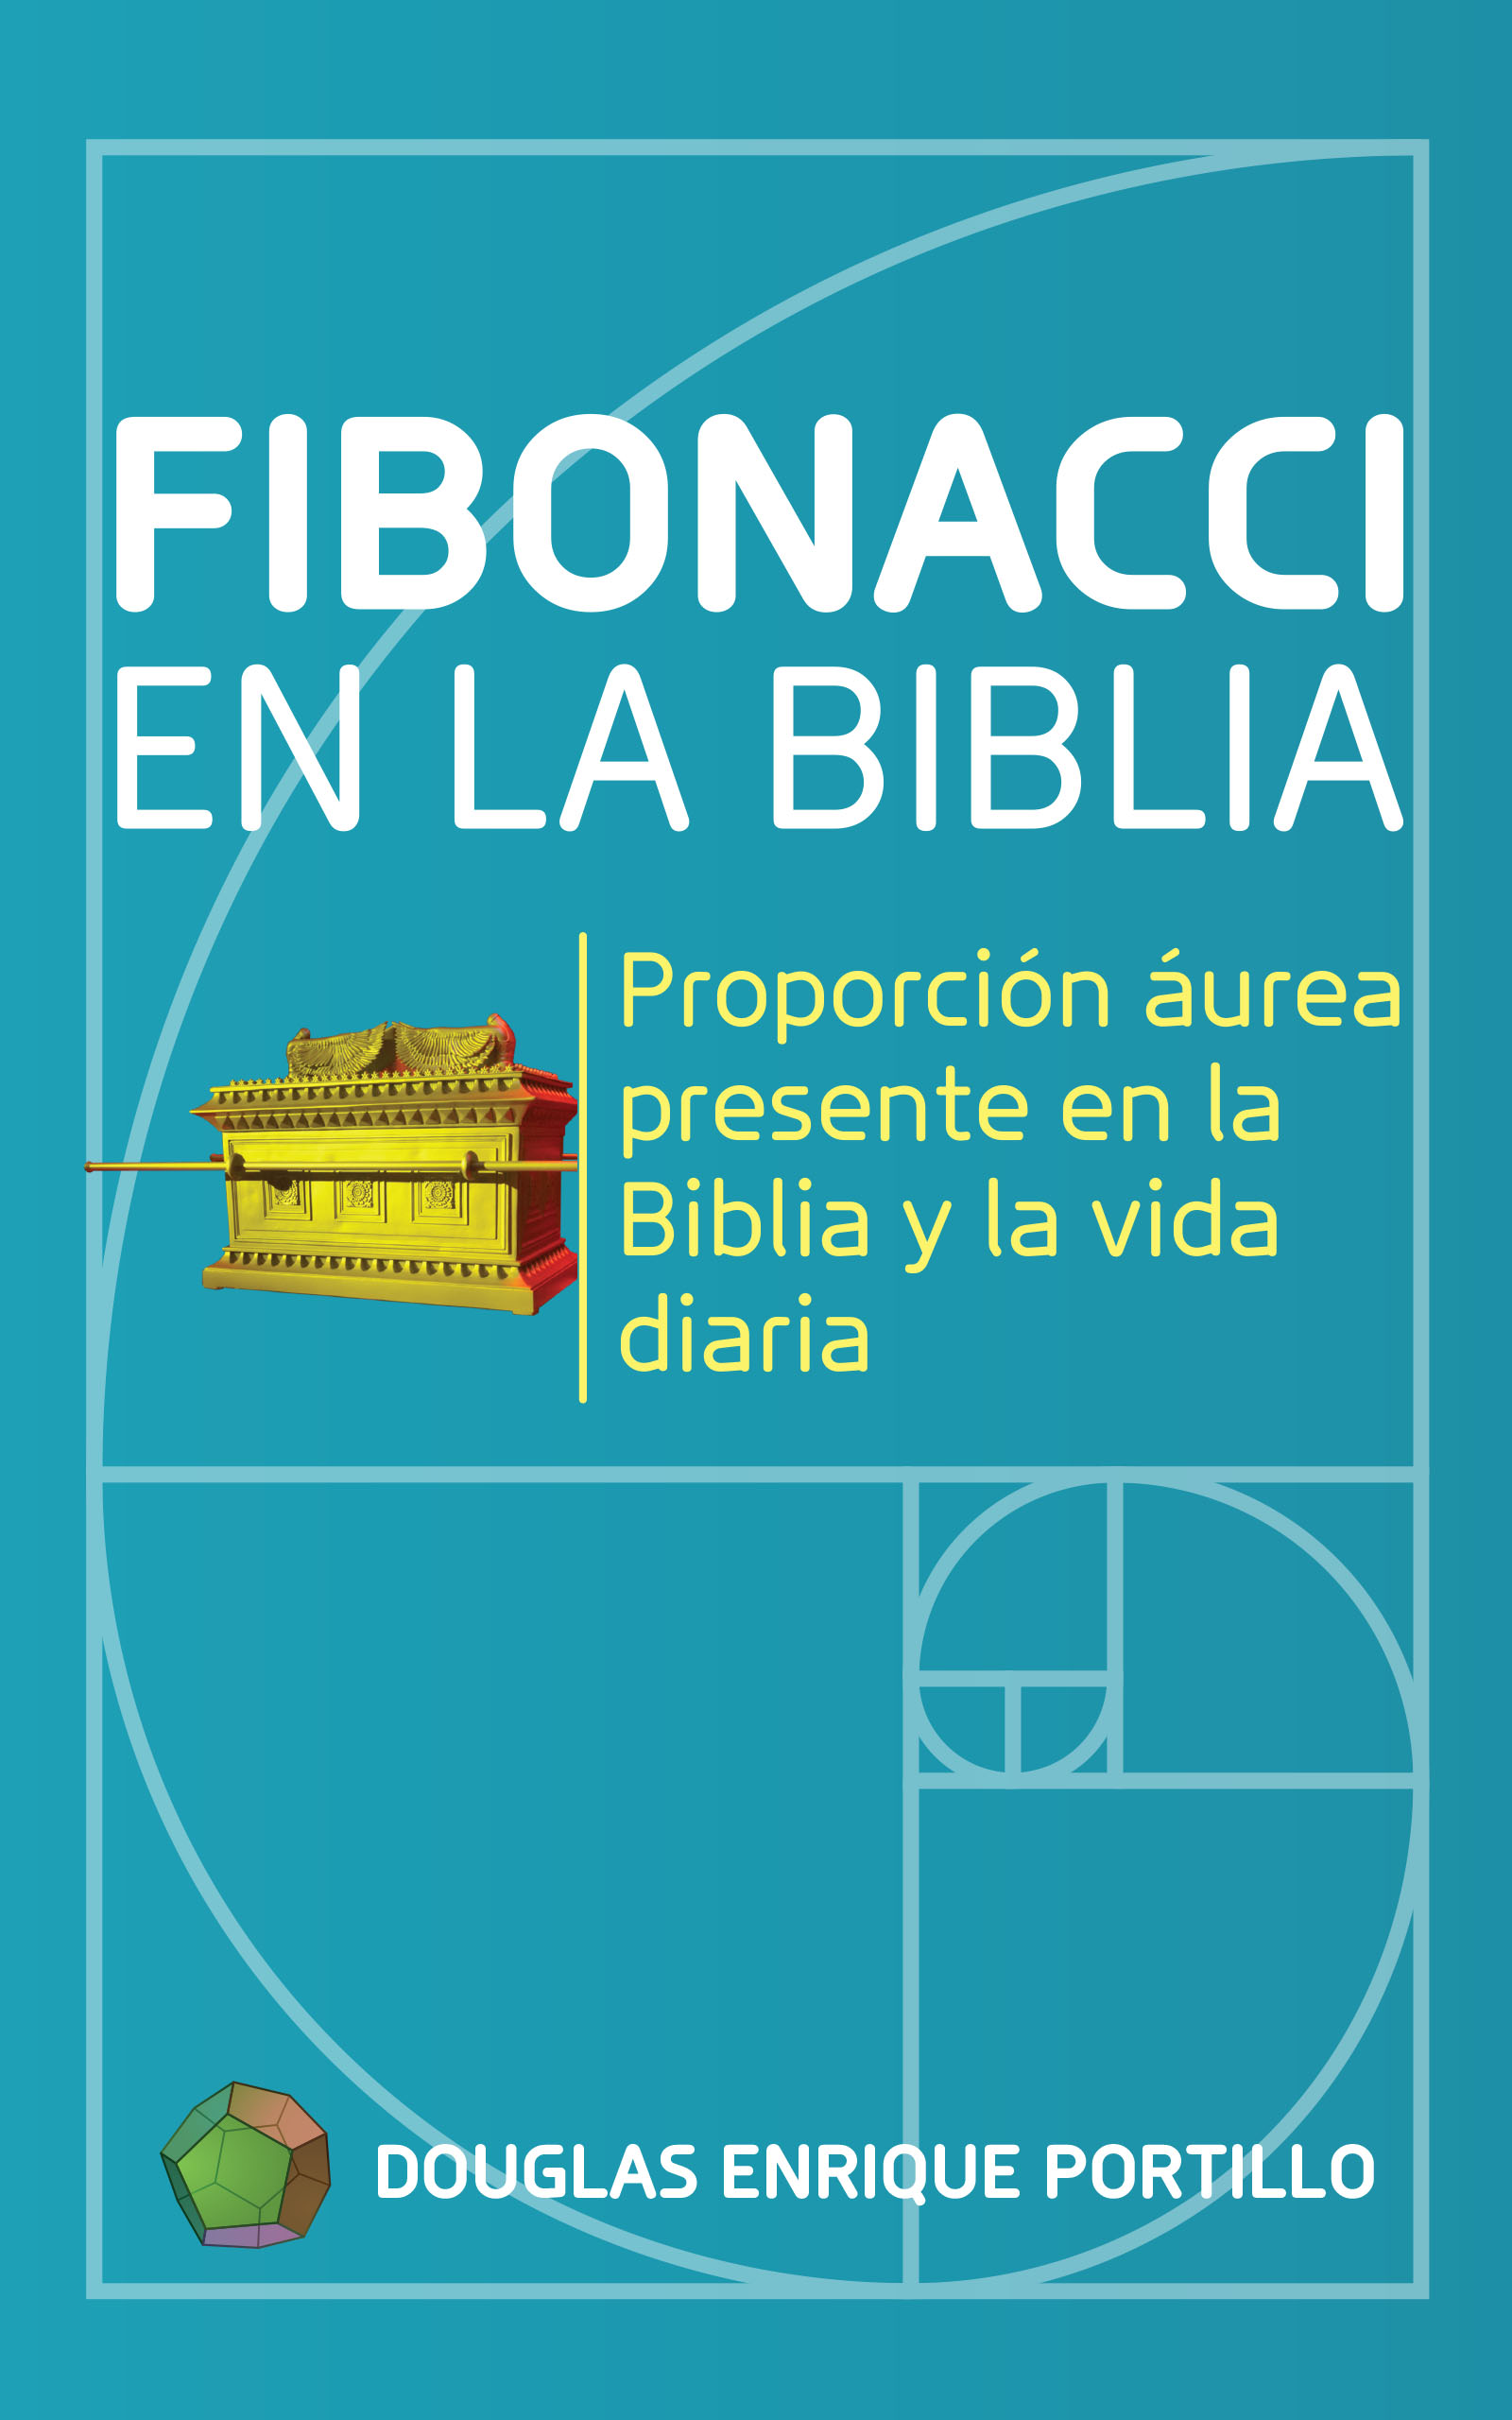 Fibonacci en la biblia, de Douglas Enrique Portillo